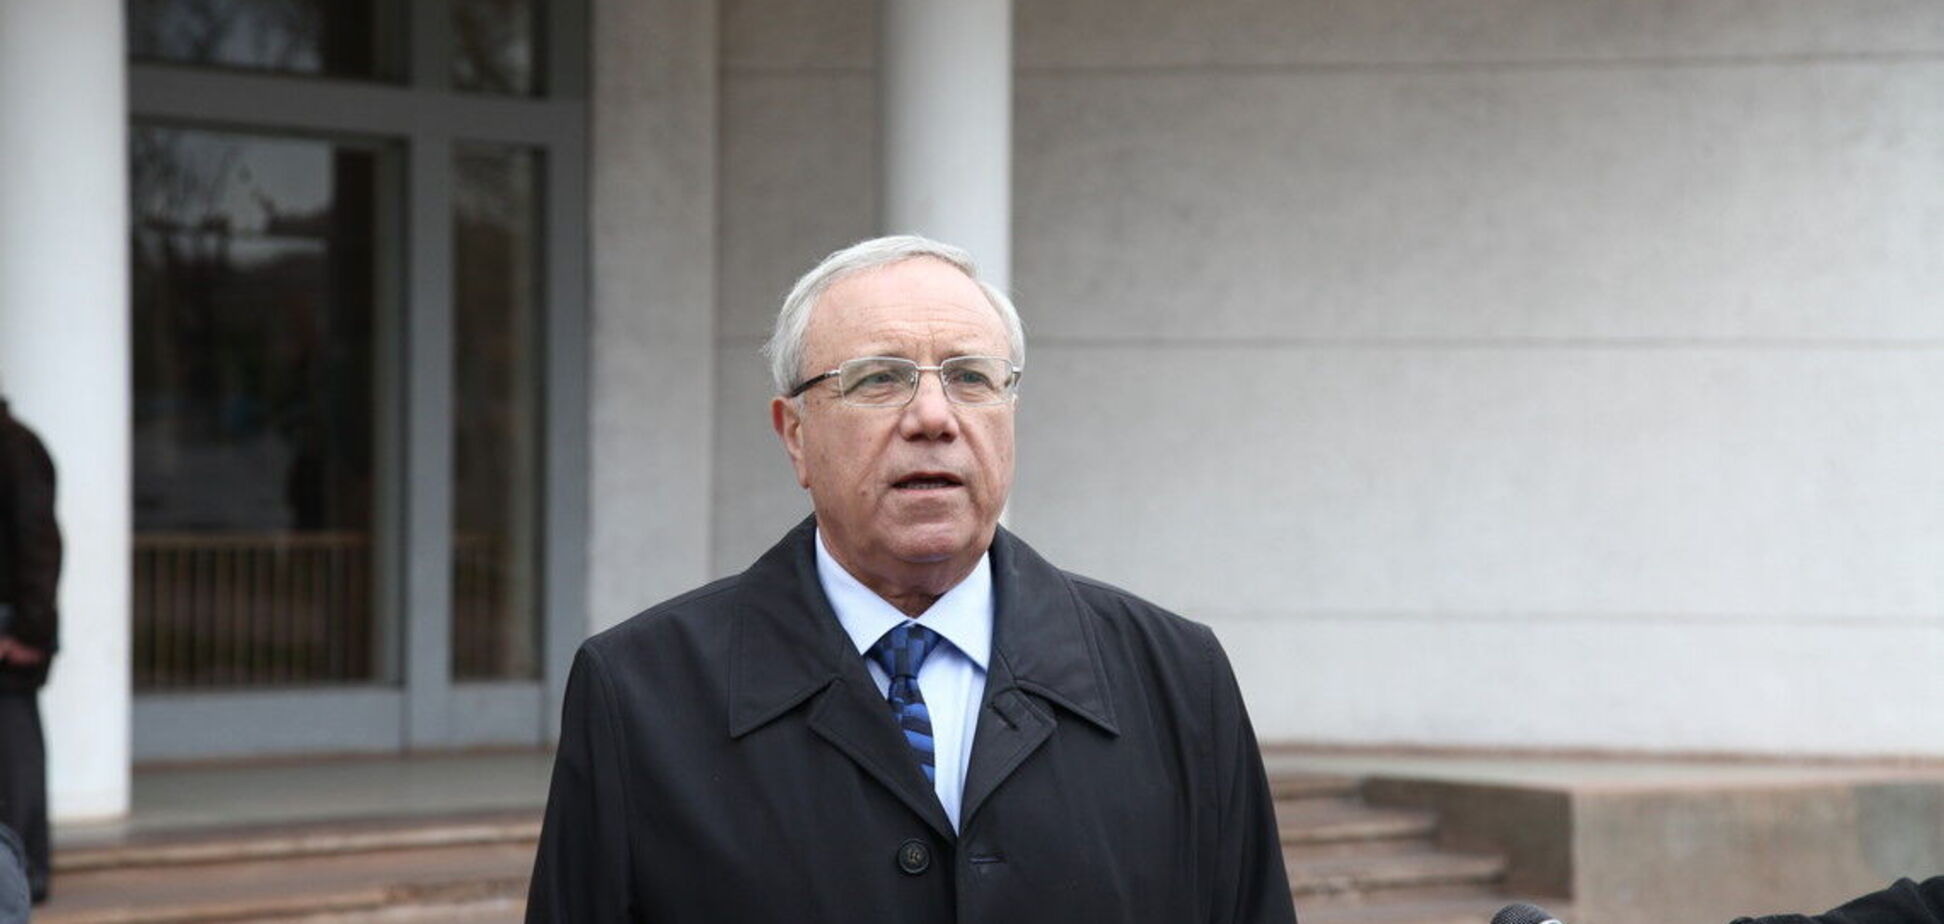 Мэр Кривого Рога заявил о давлении со стороны власти перед выборами